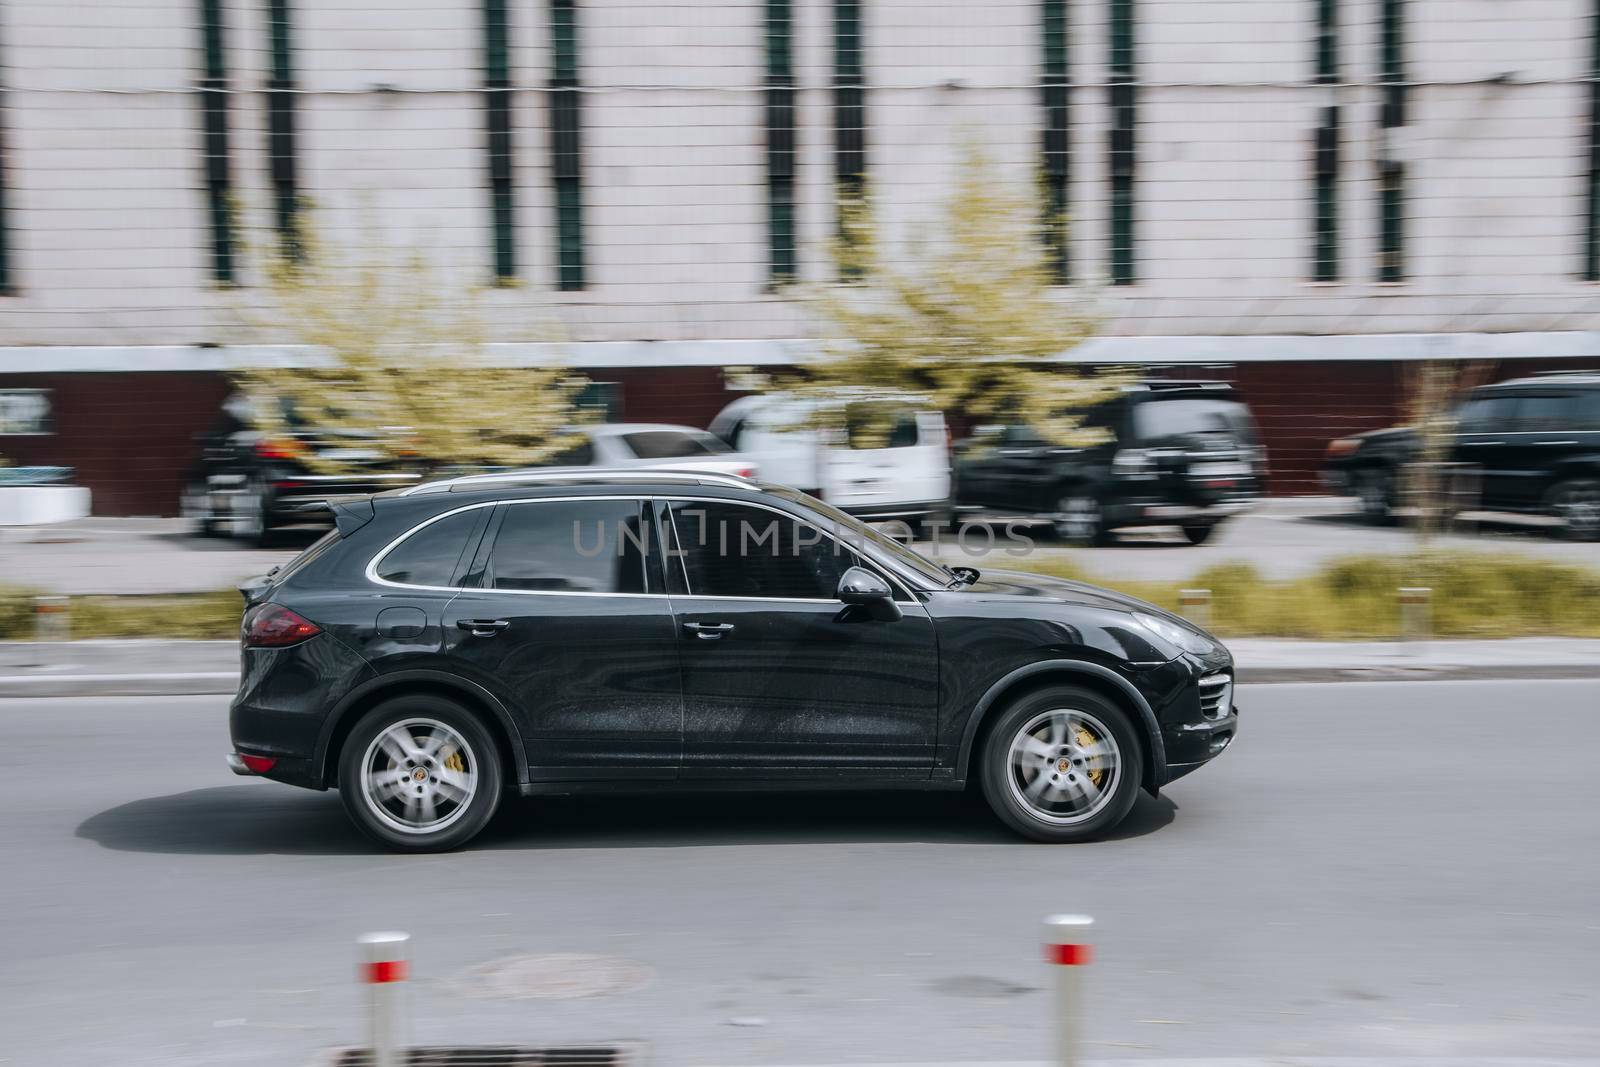 Ukraine, Kyiv - 13 May 2021: Black Porsche Cayenne car moving on the street. Editorial